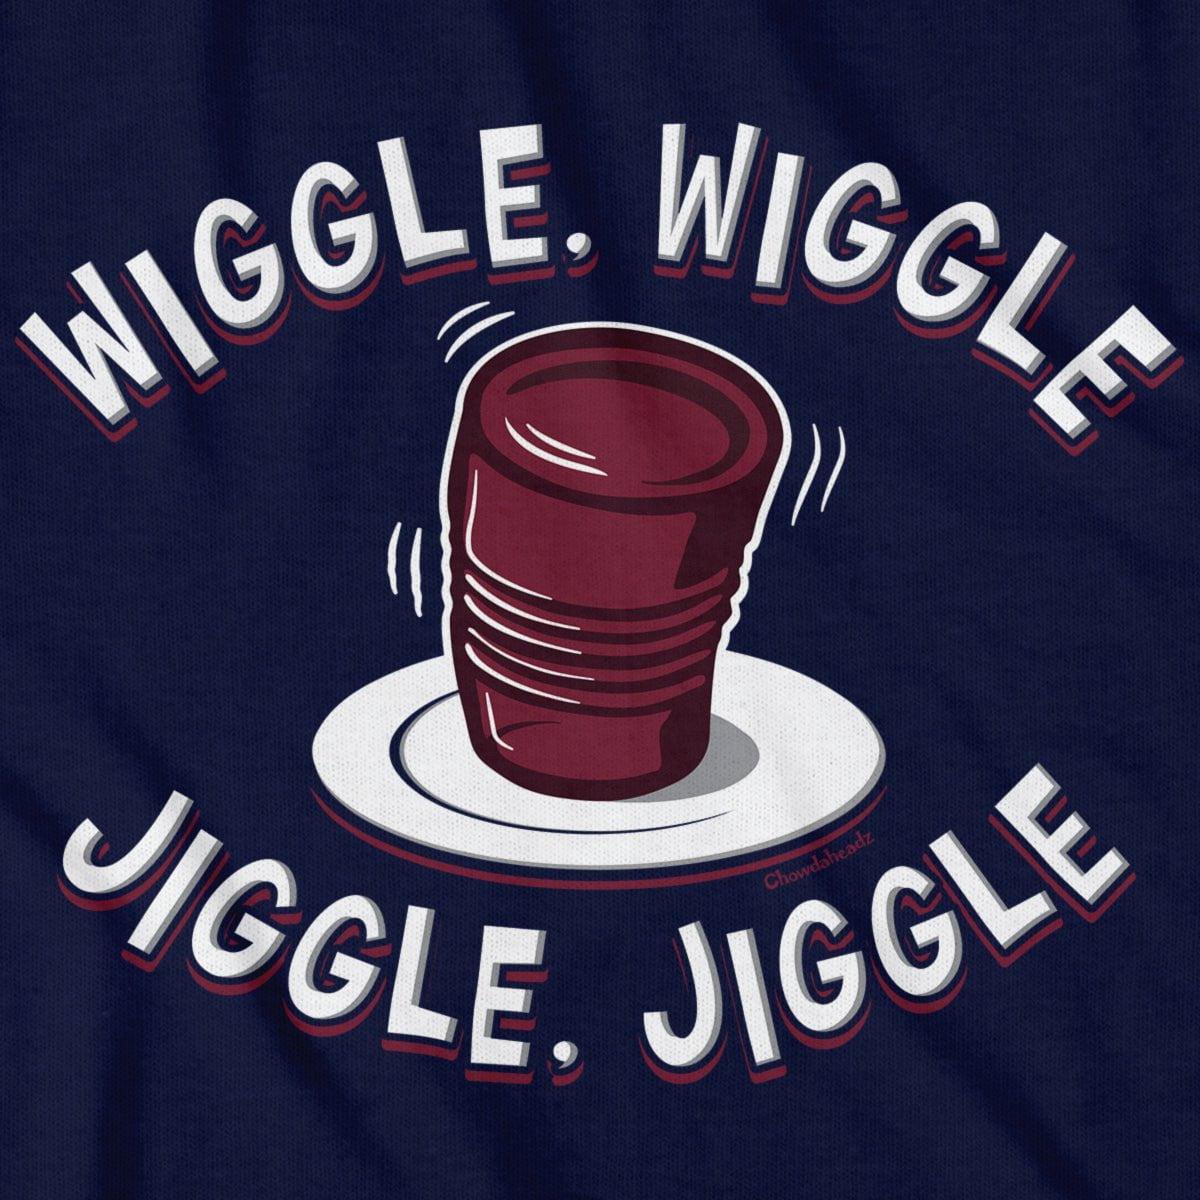 Wiggle Wiggle Jiggle Jiggle Cranberry Sauce T-Shirt - Chowdaheadz